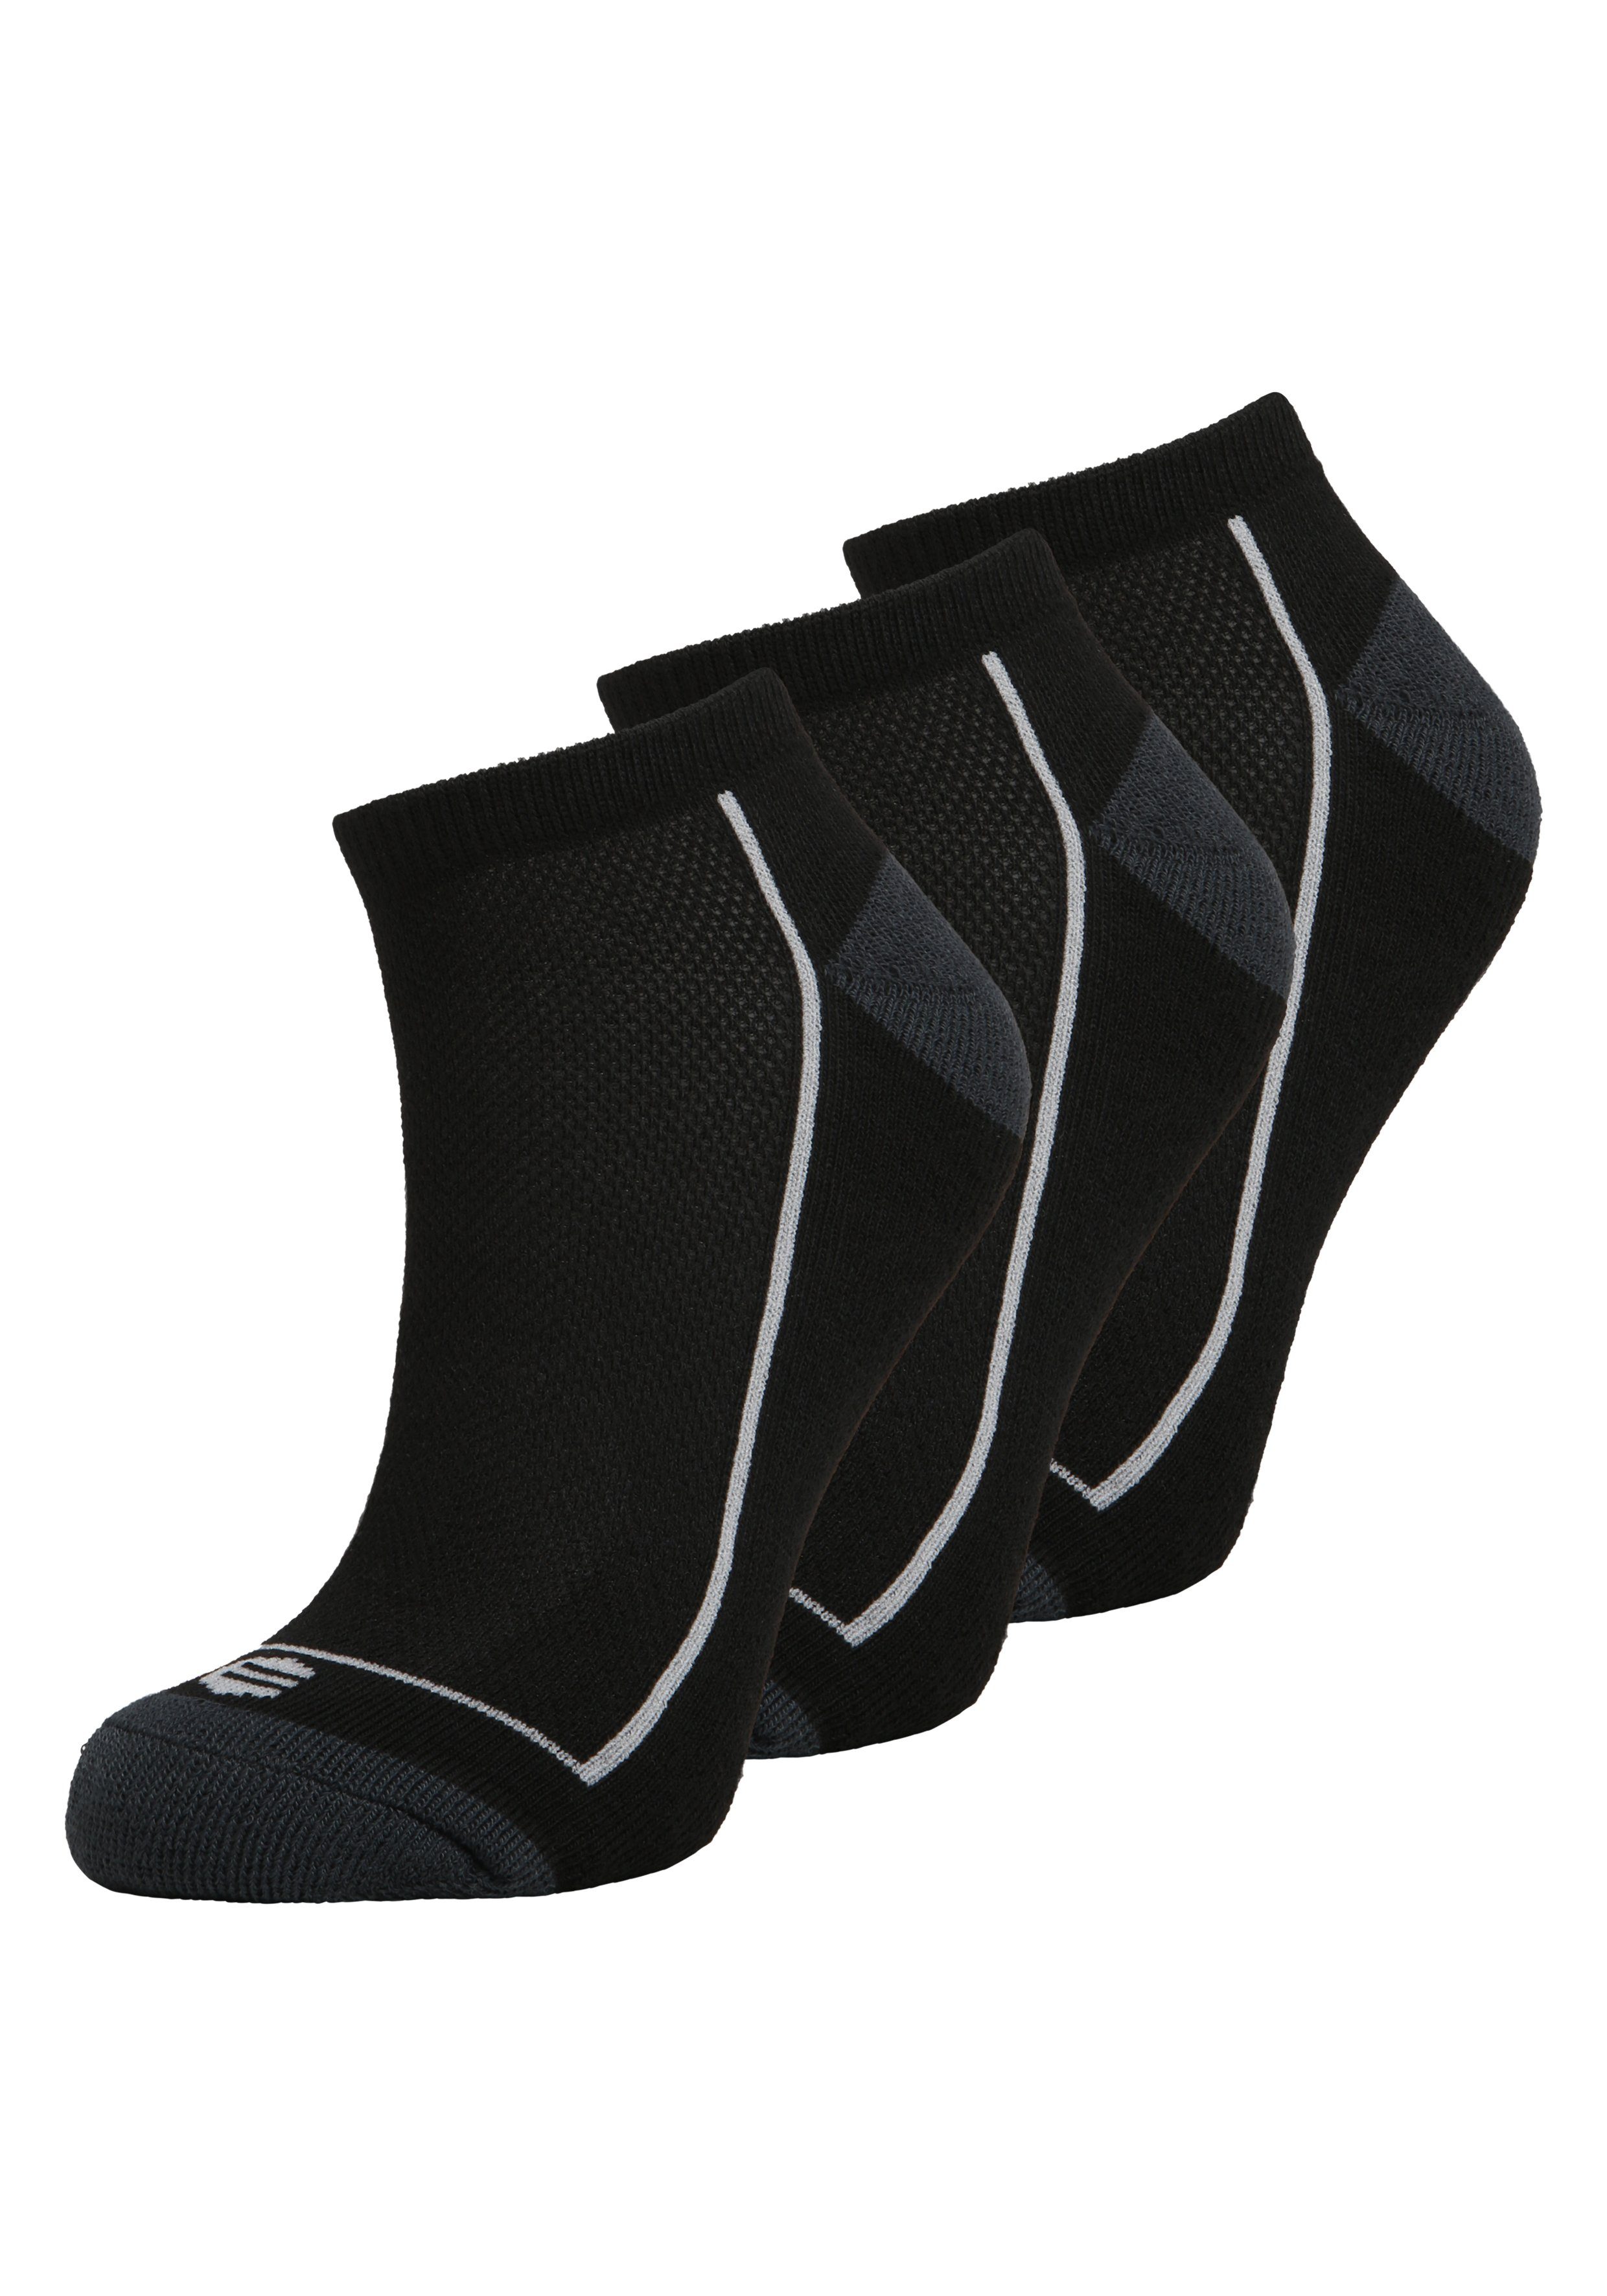 ENDURANCE Socken Boron (3-Paar) im 3er Pack mit Mesh-Material